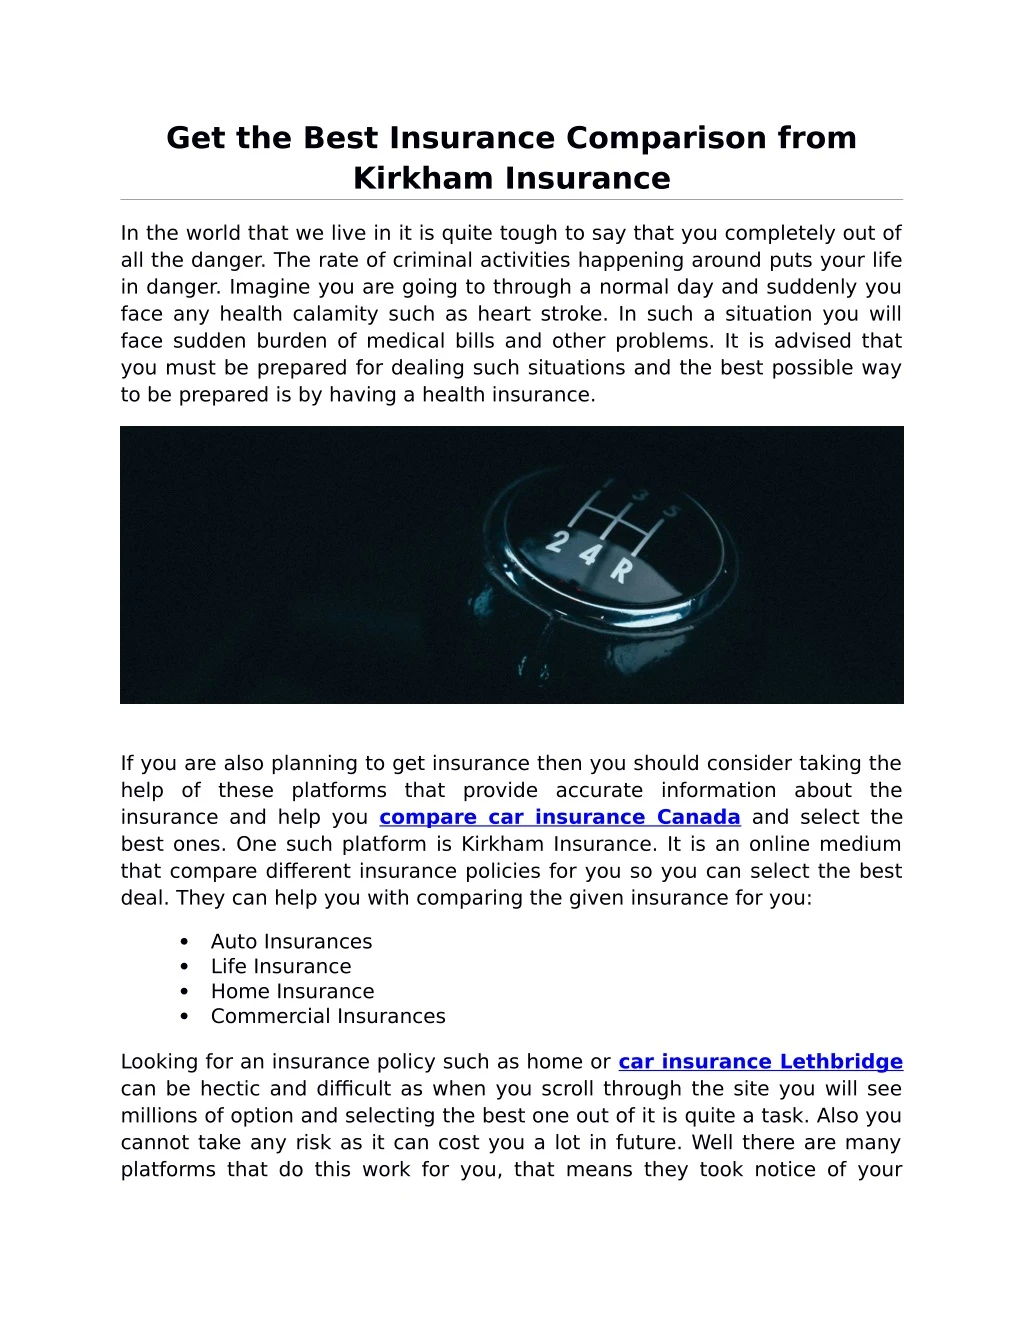 get the best insurance comparison from kirkham